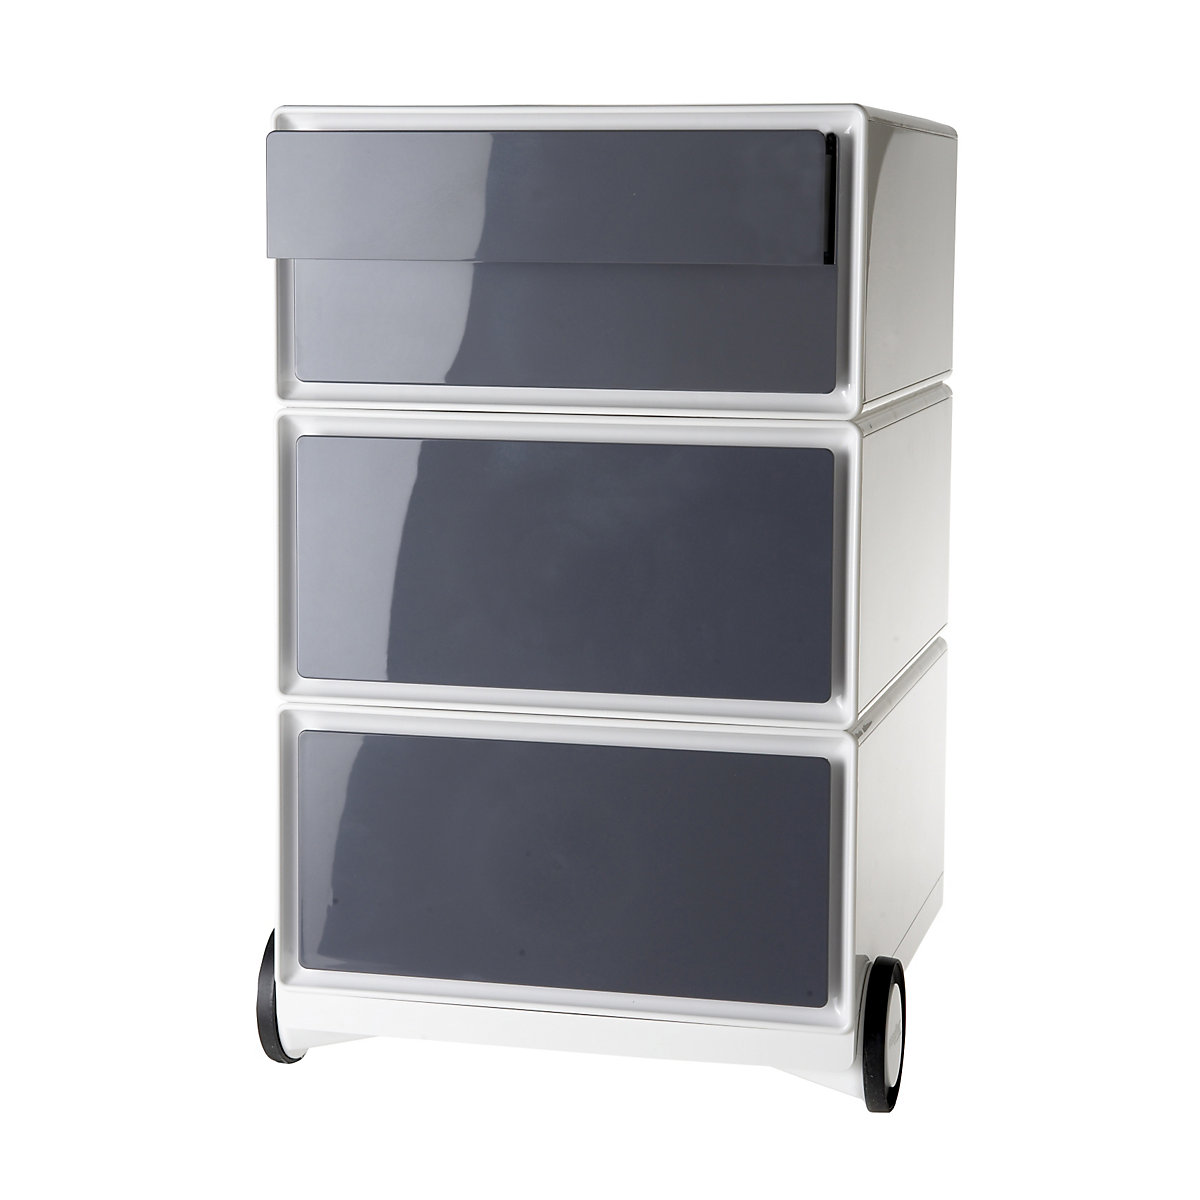 Pojízdný kontejner easyBox® – Paperflow, 2 zásuvky, 2 ploché výsuvy, bílá / antracitová-13